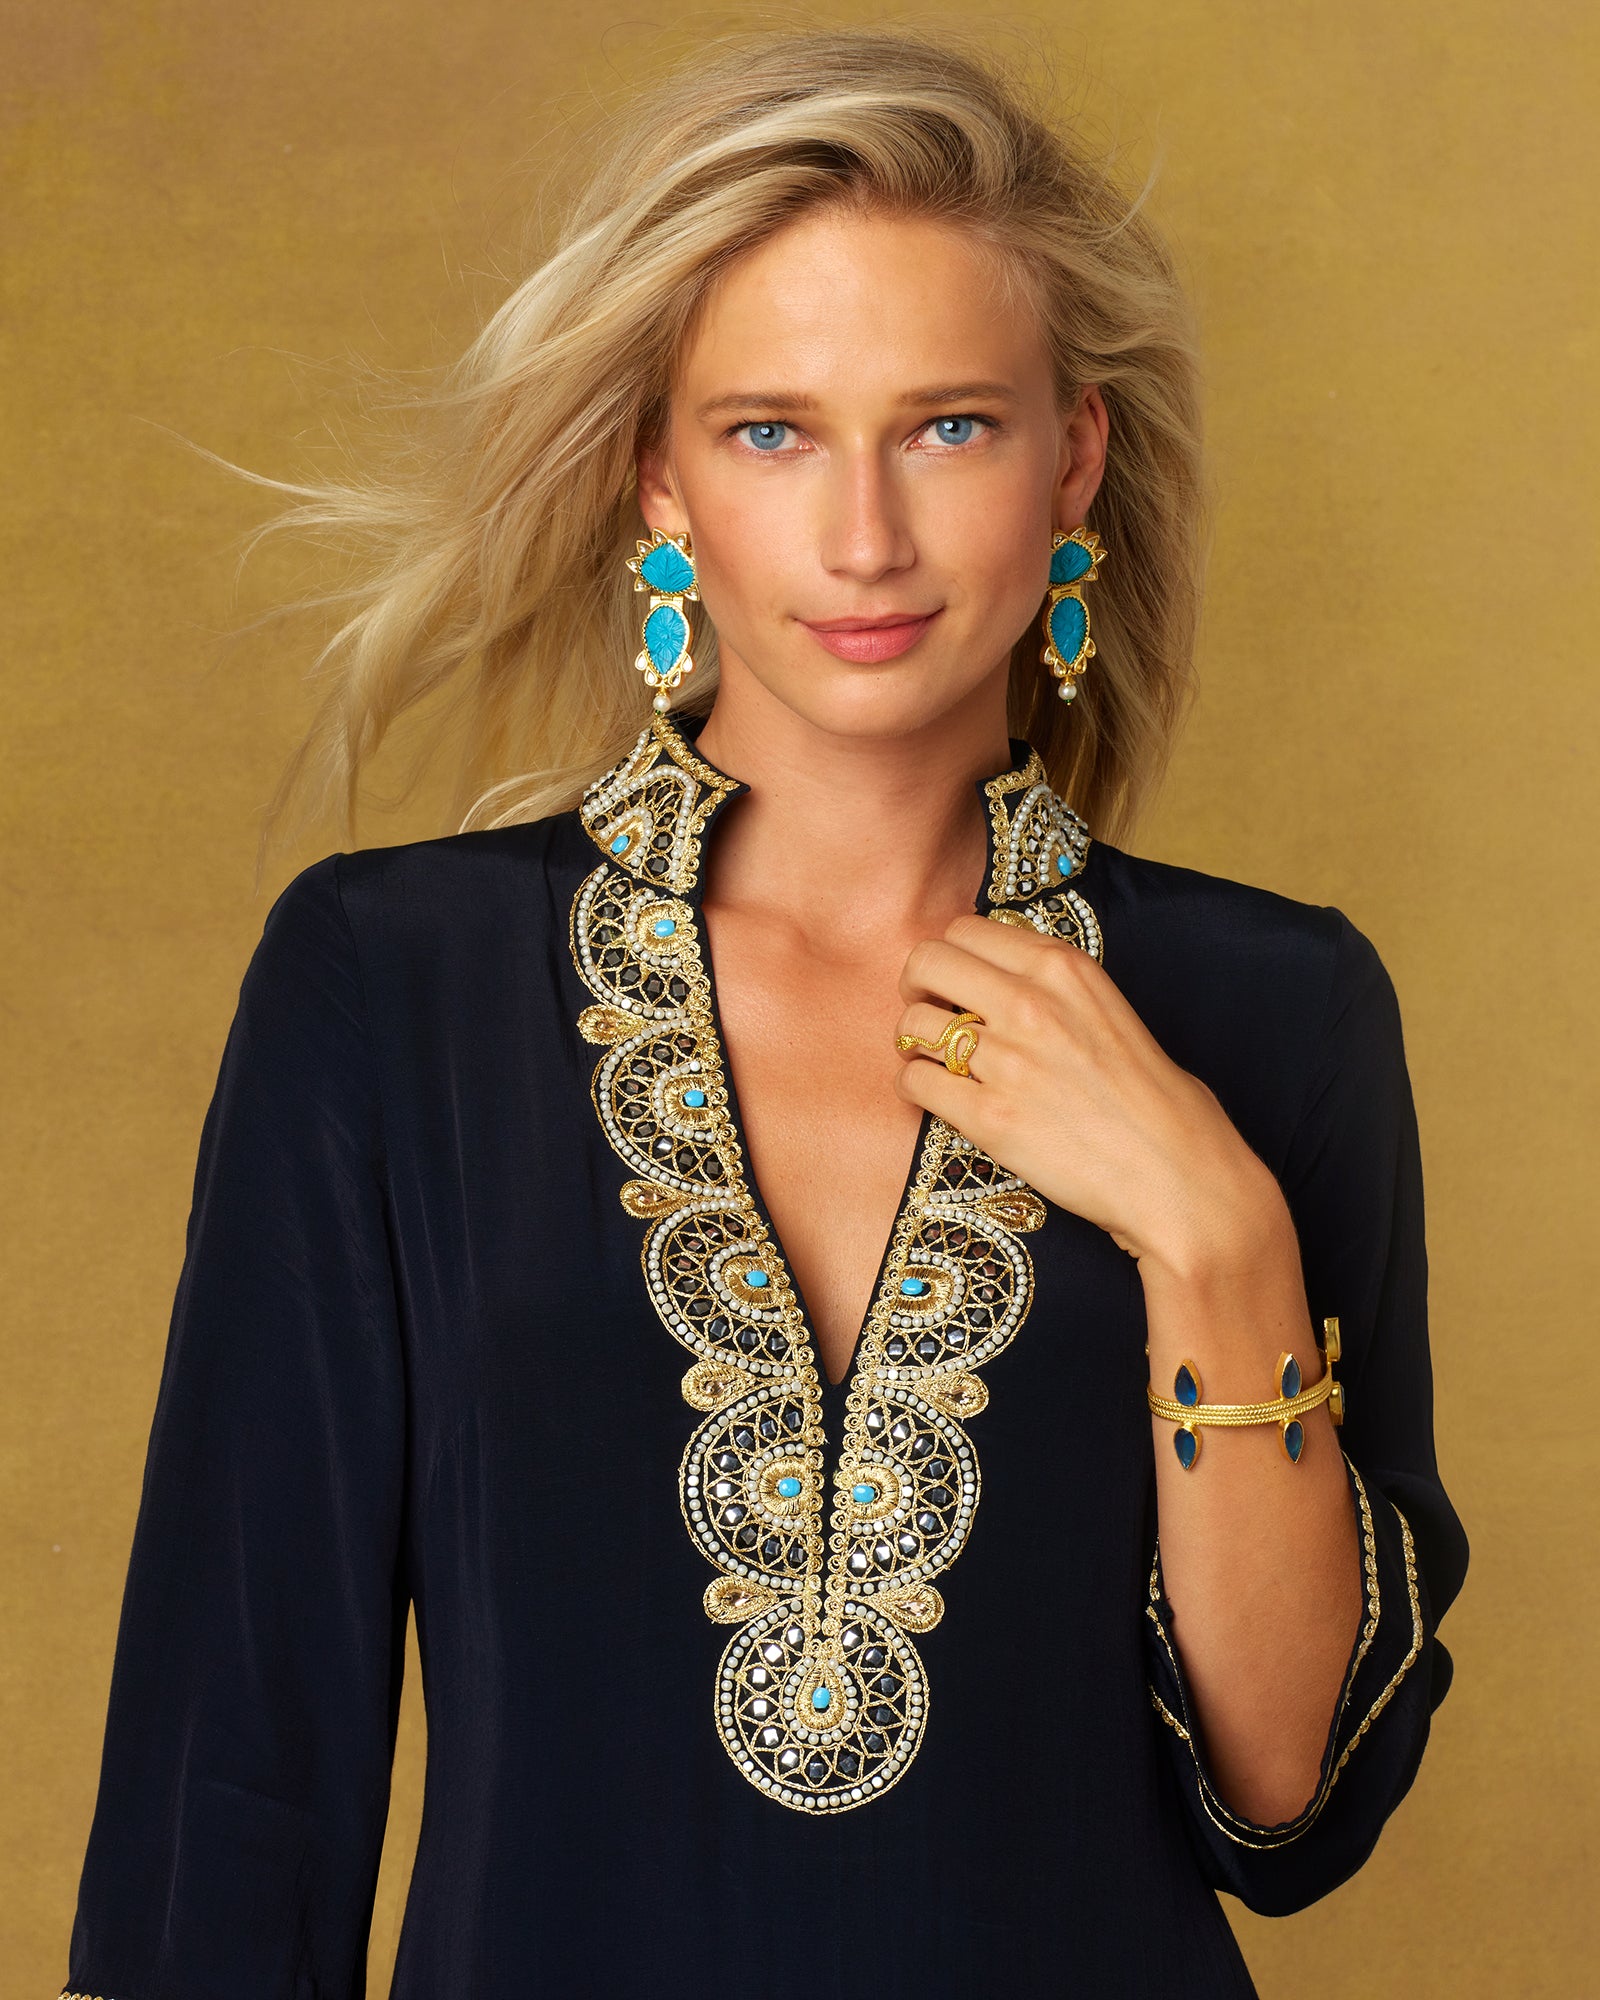 Noor Long Black Tunic Dress with Gold Embellishment-Closeup